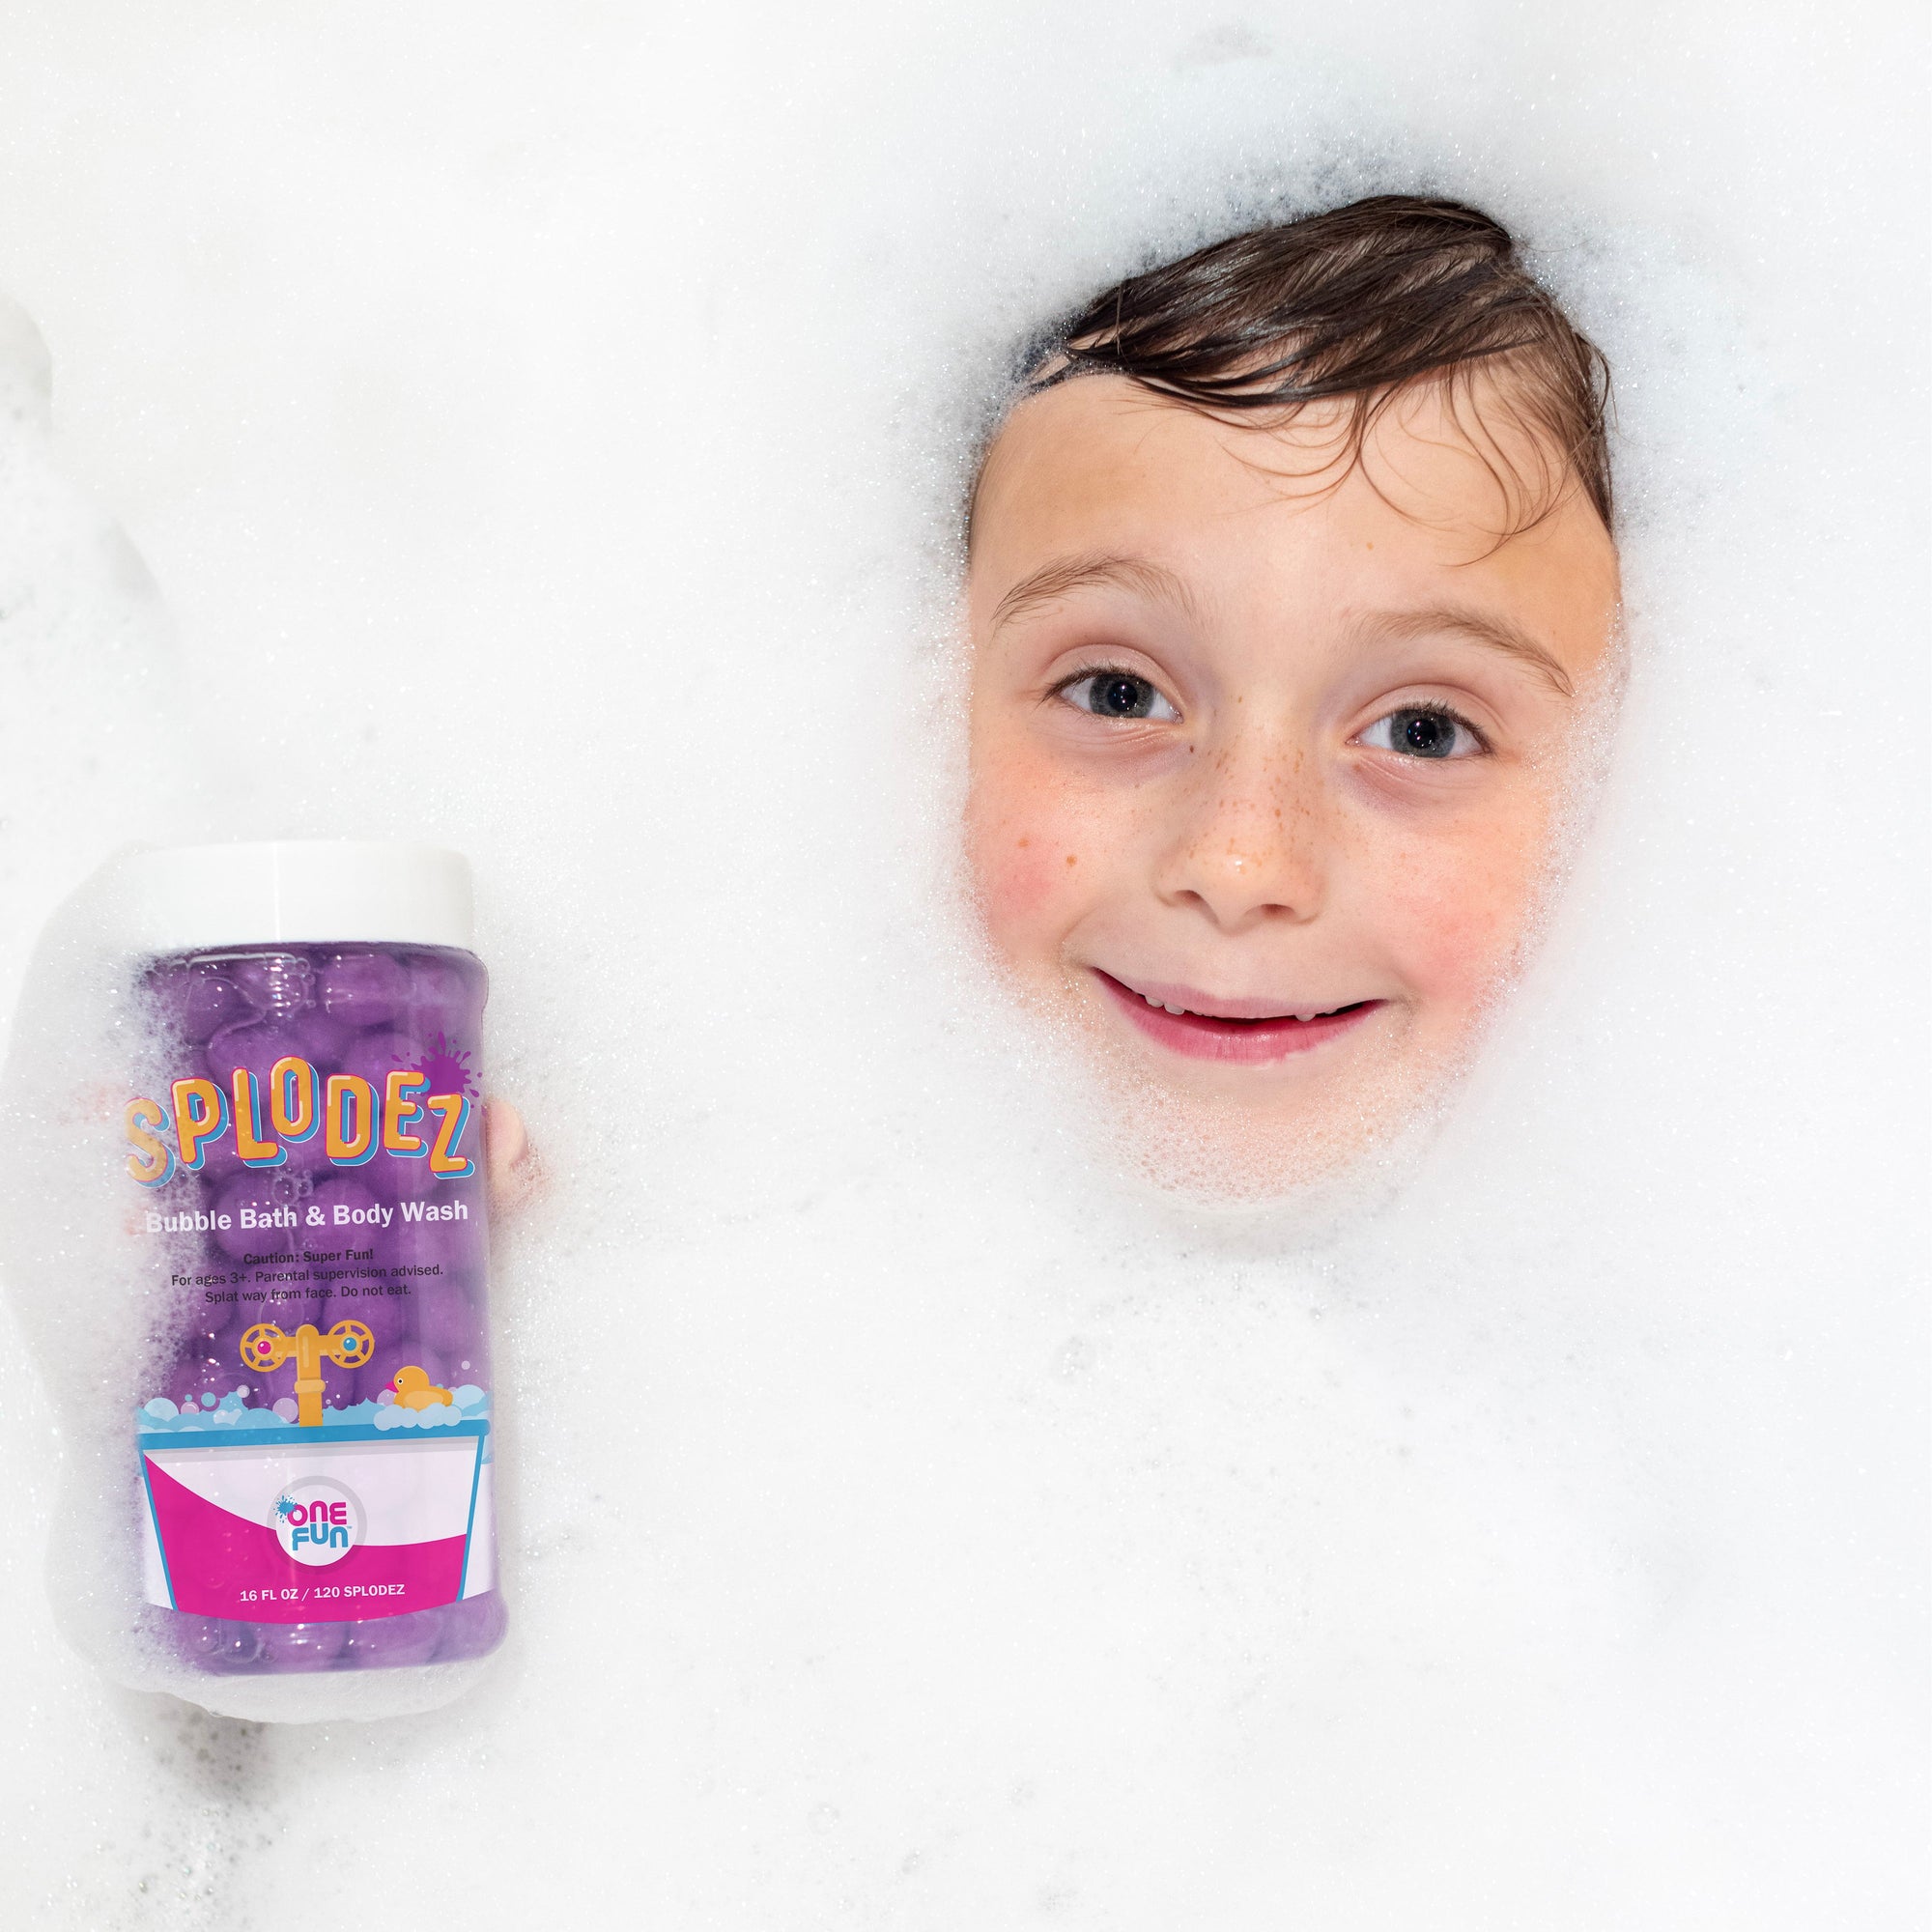 SPLODEZ Mini - Bubble Bath & Body Wash